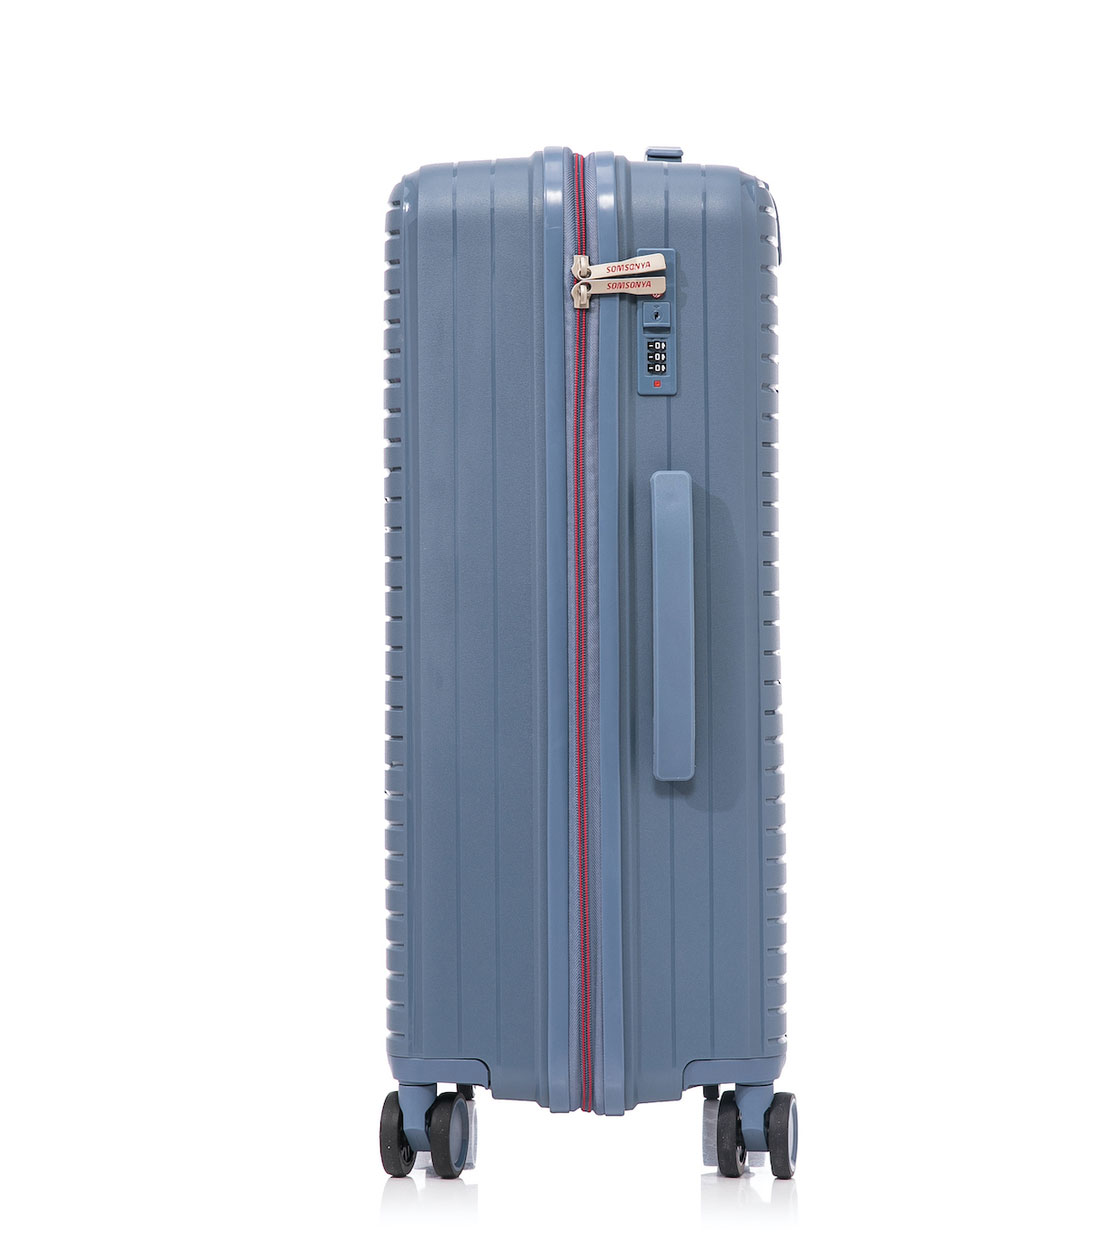 Малый чемодан Somsonya PP Singapore S (56 см) denim